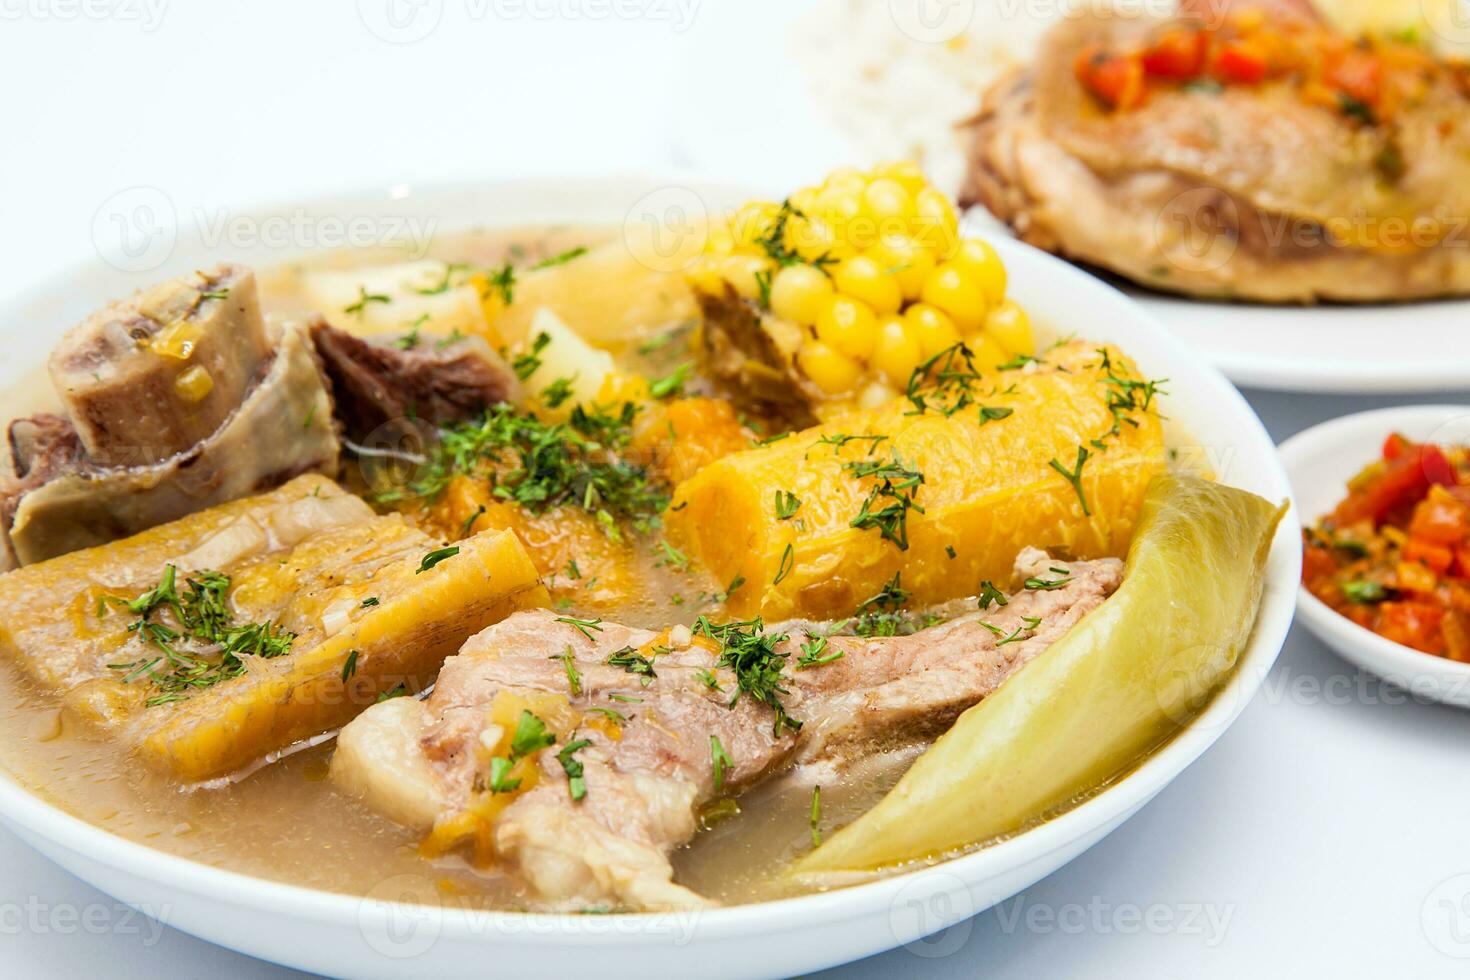 tradicional colombiano sopa a partir de a região do santander chamado puchero foto